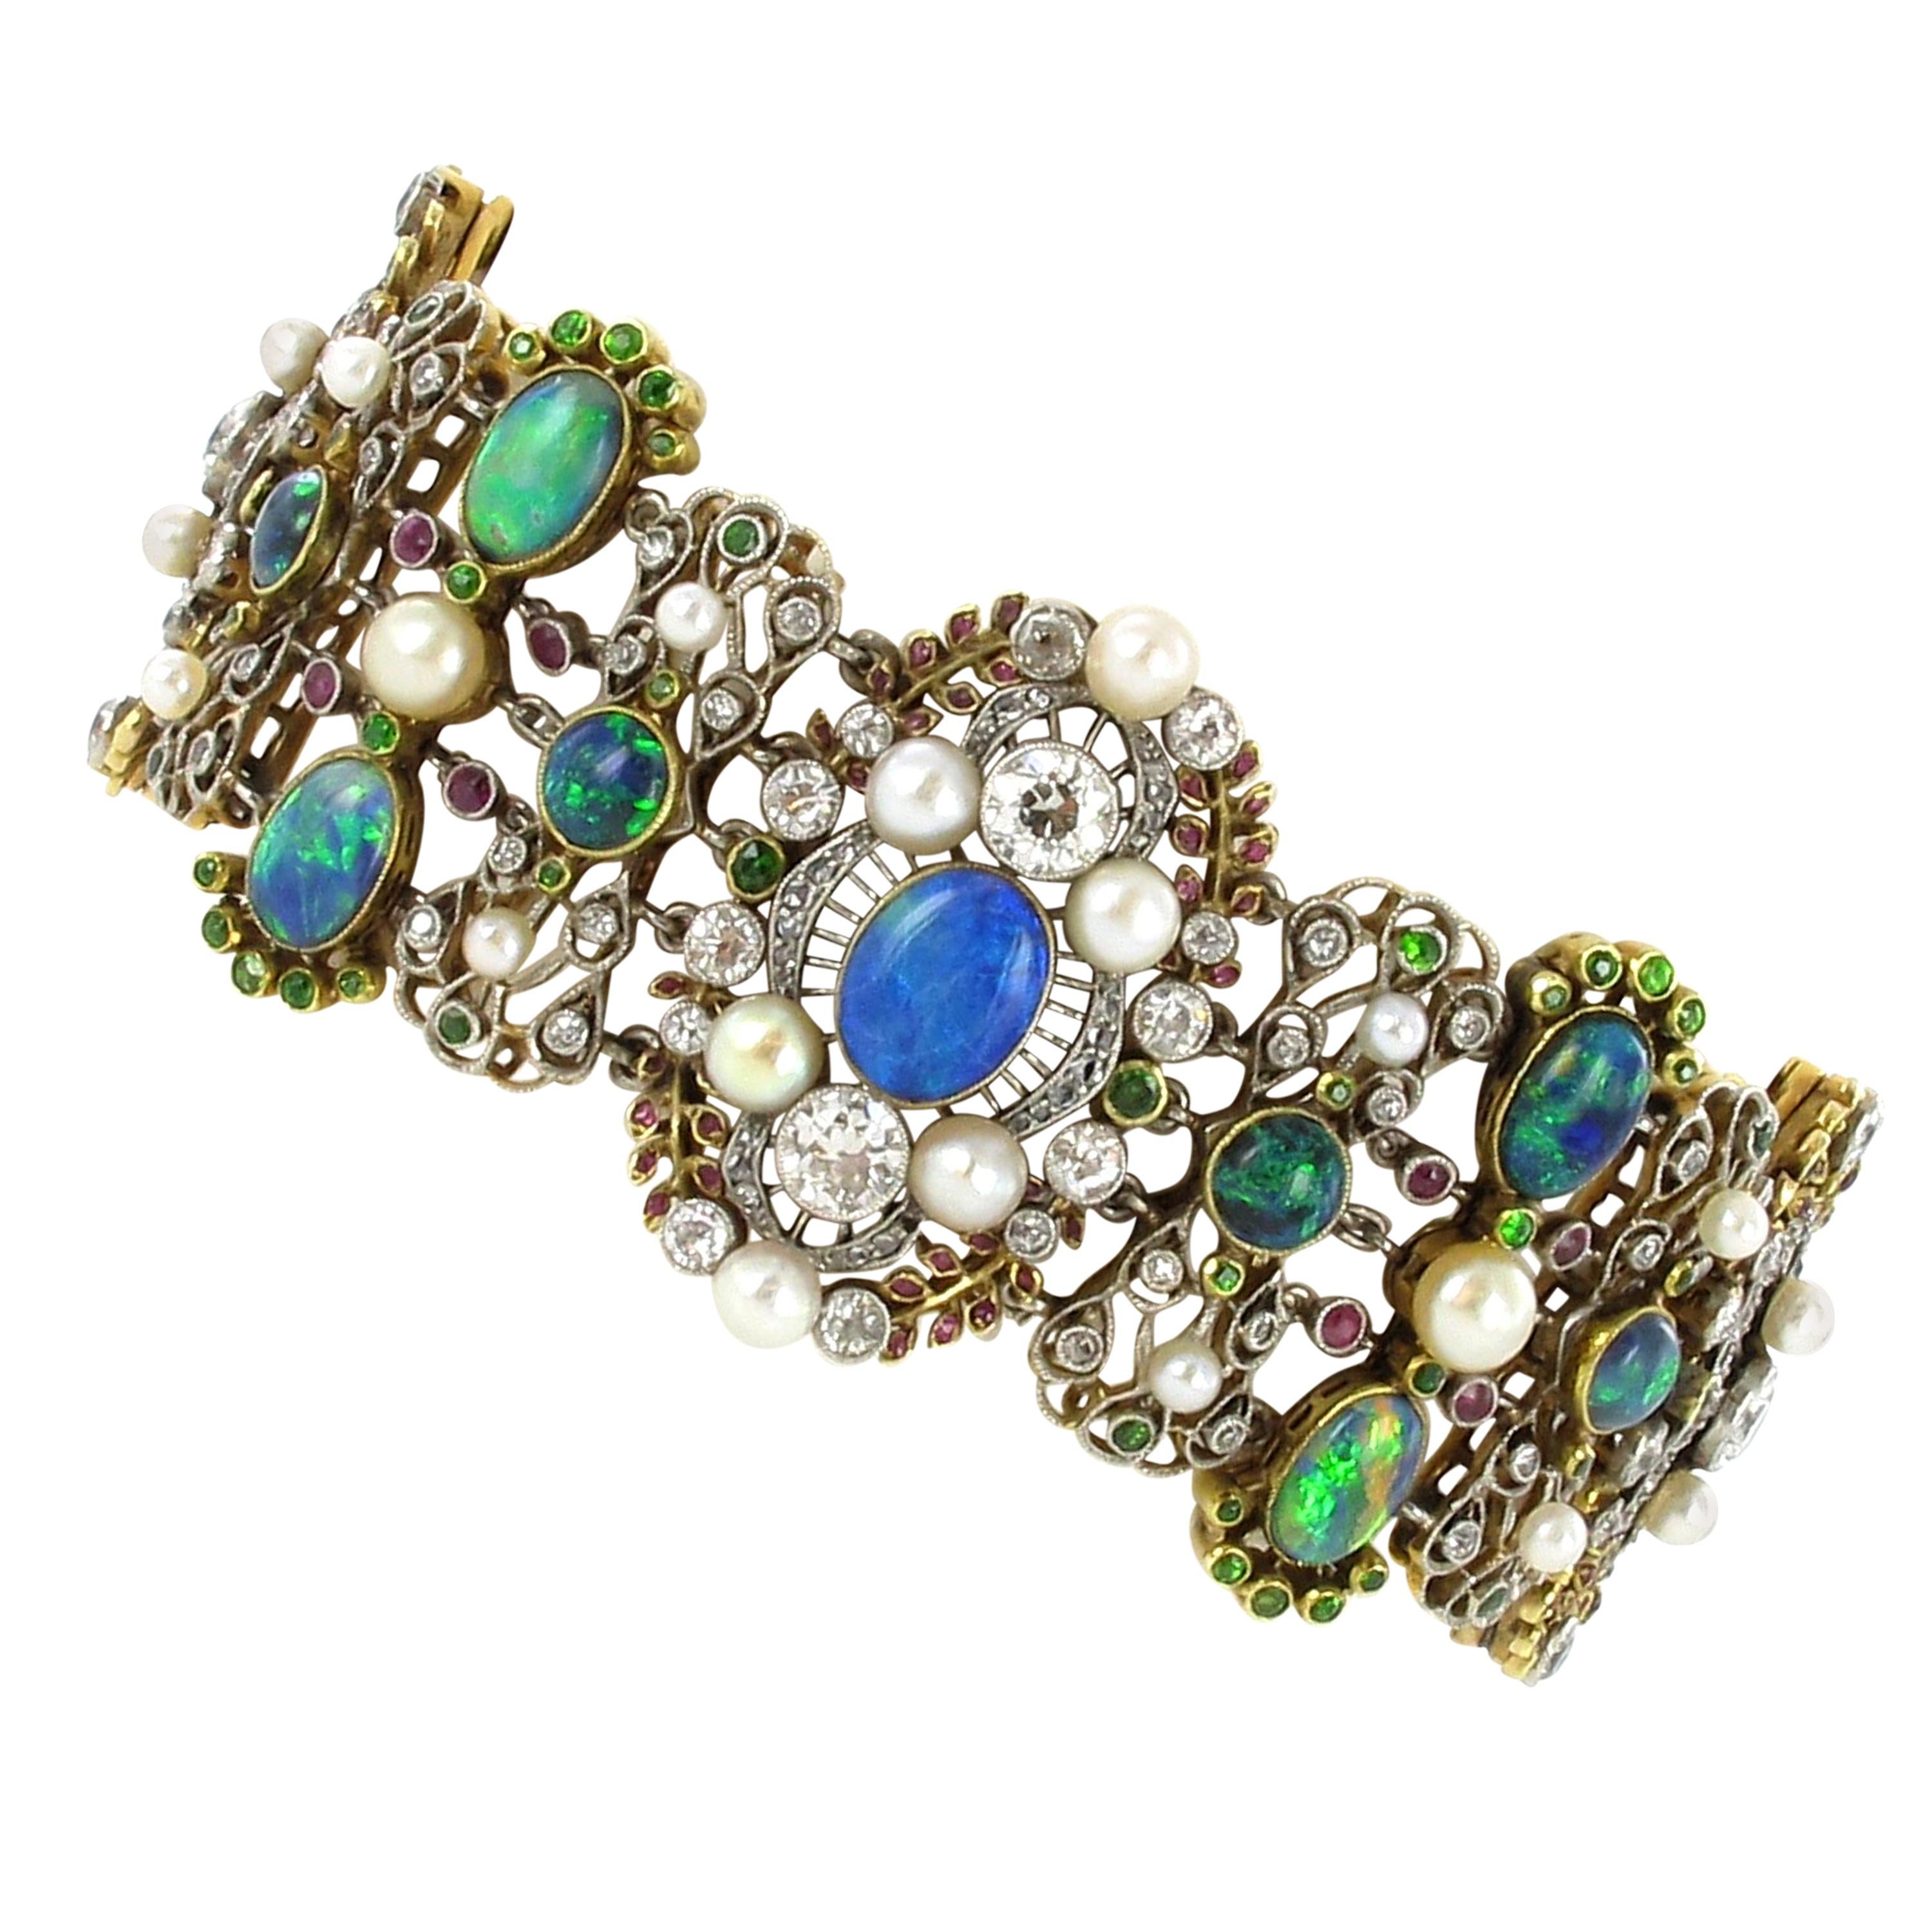 Belle Époque/Art Nouveau Bracelet with Opals, Pearls and Diamonds by Rothmuller